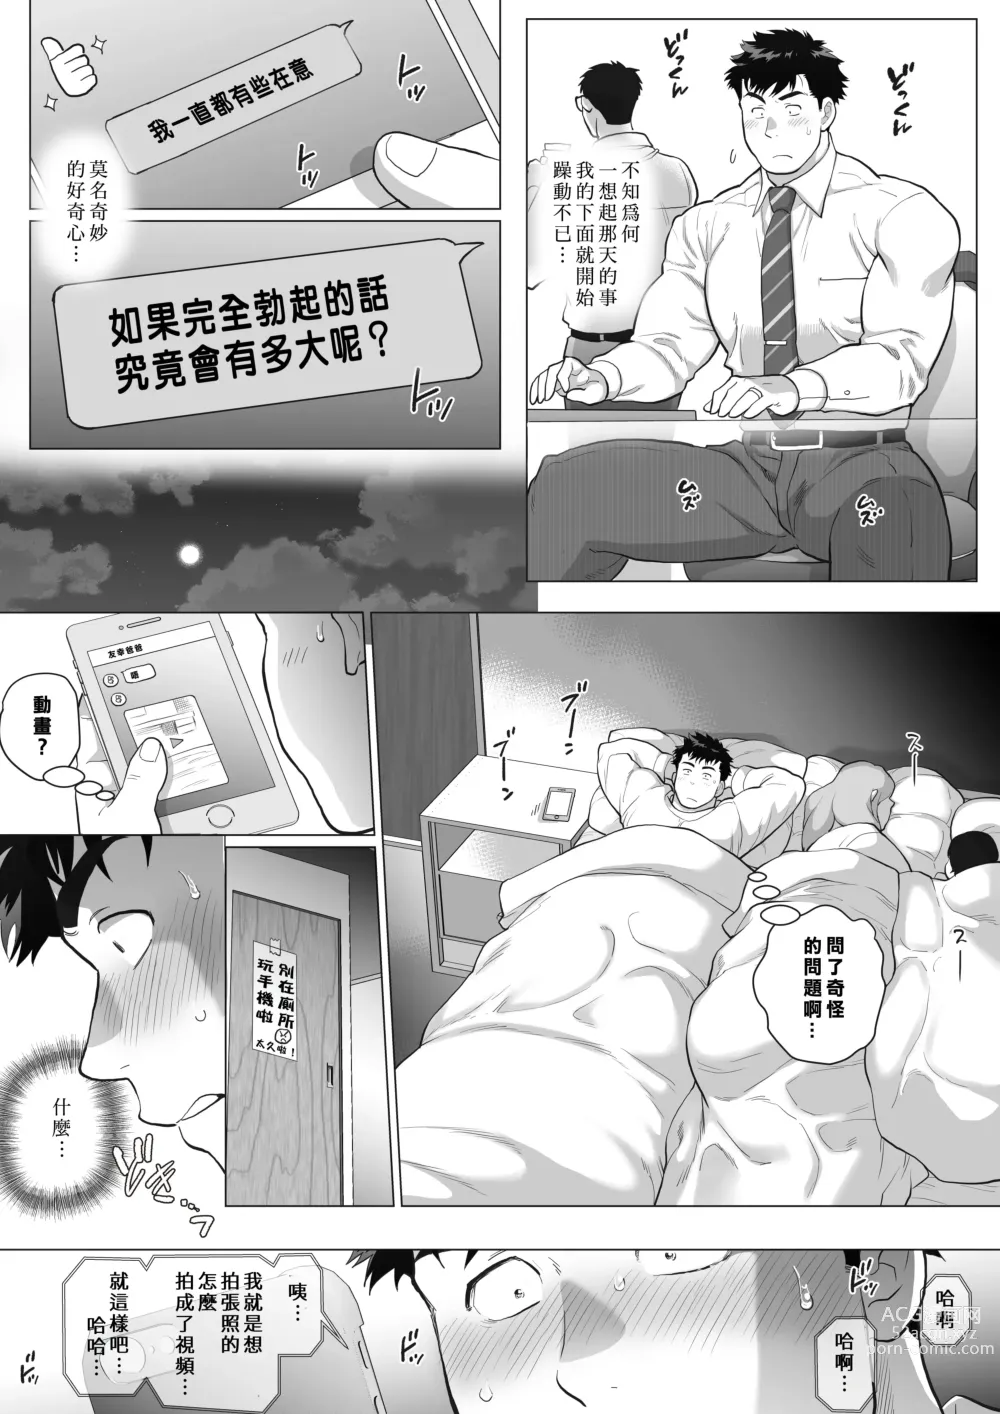 Page 13 of manga 直人爸爸与友幸爸爸 第一话